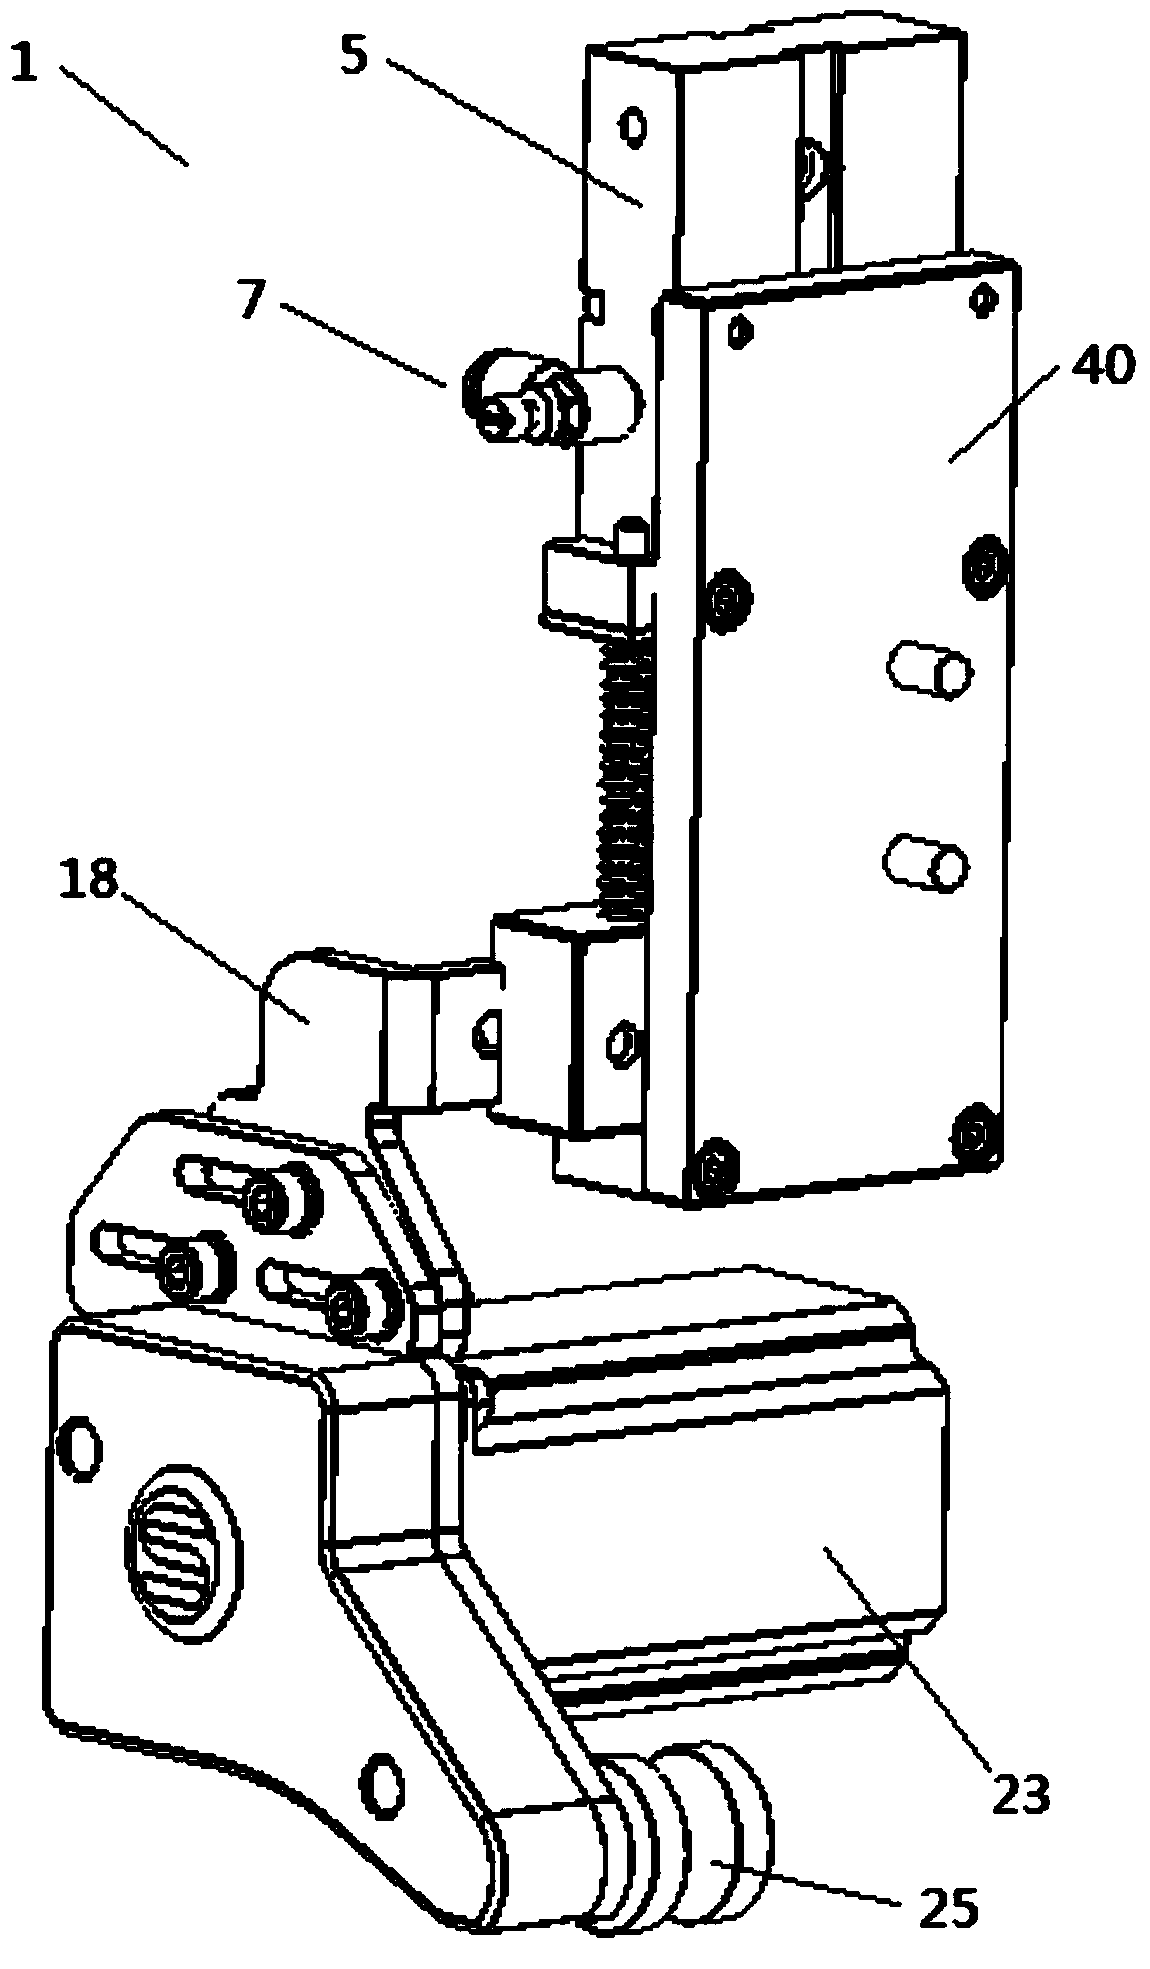 Full-automatic cloth dragging machine